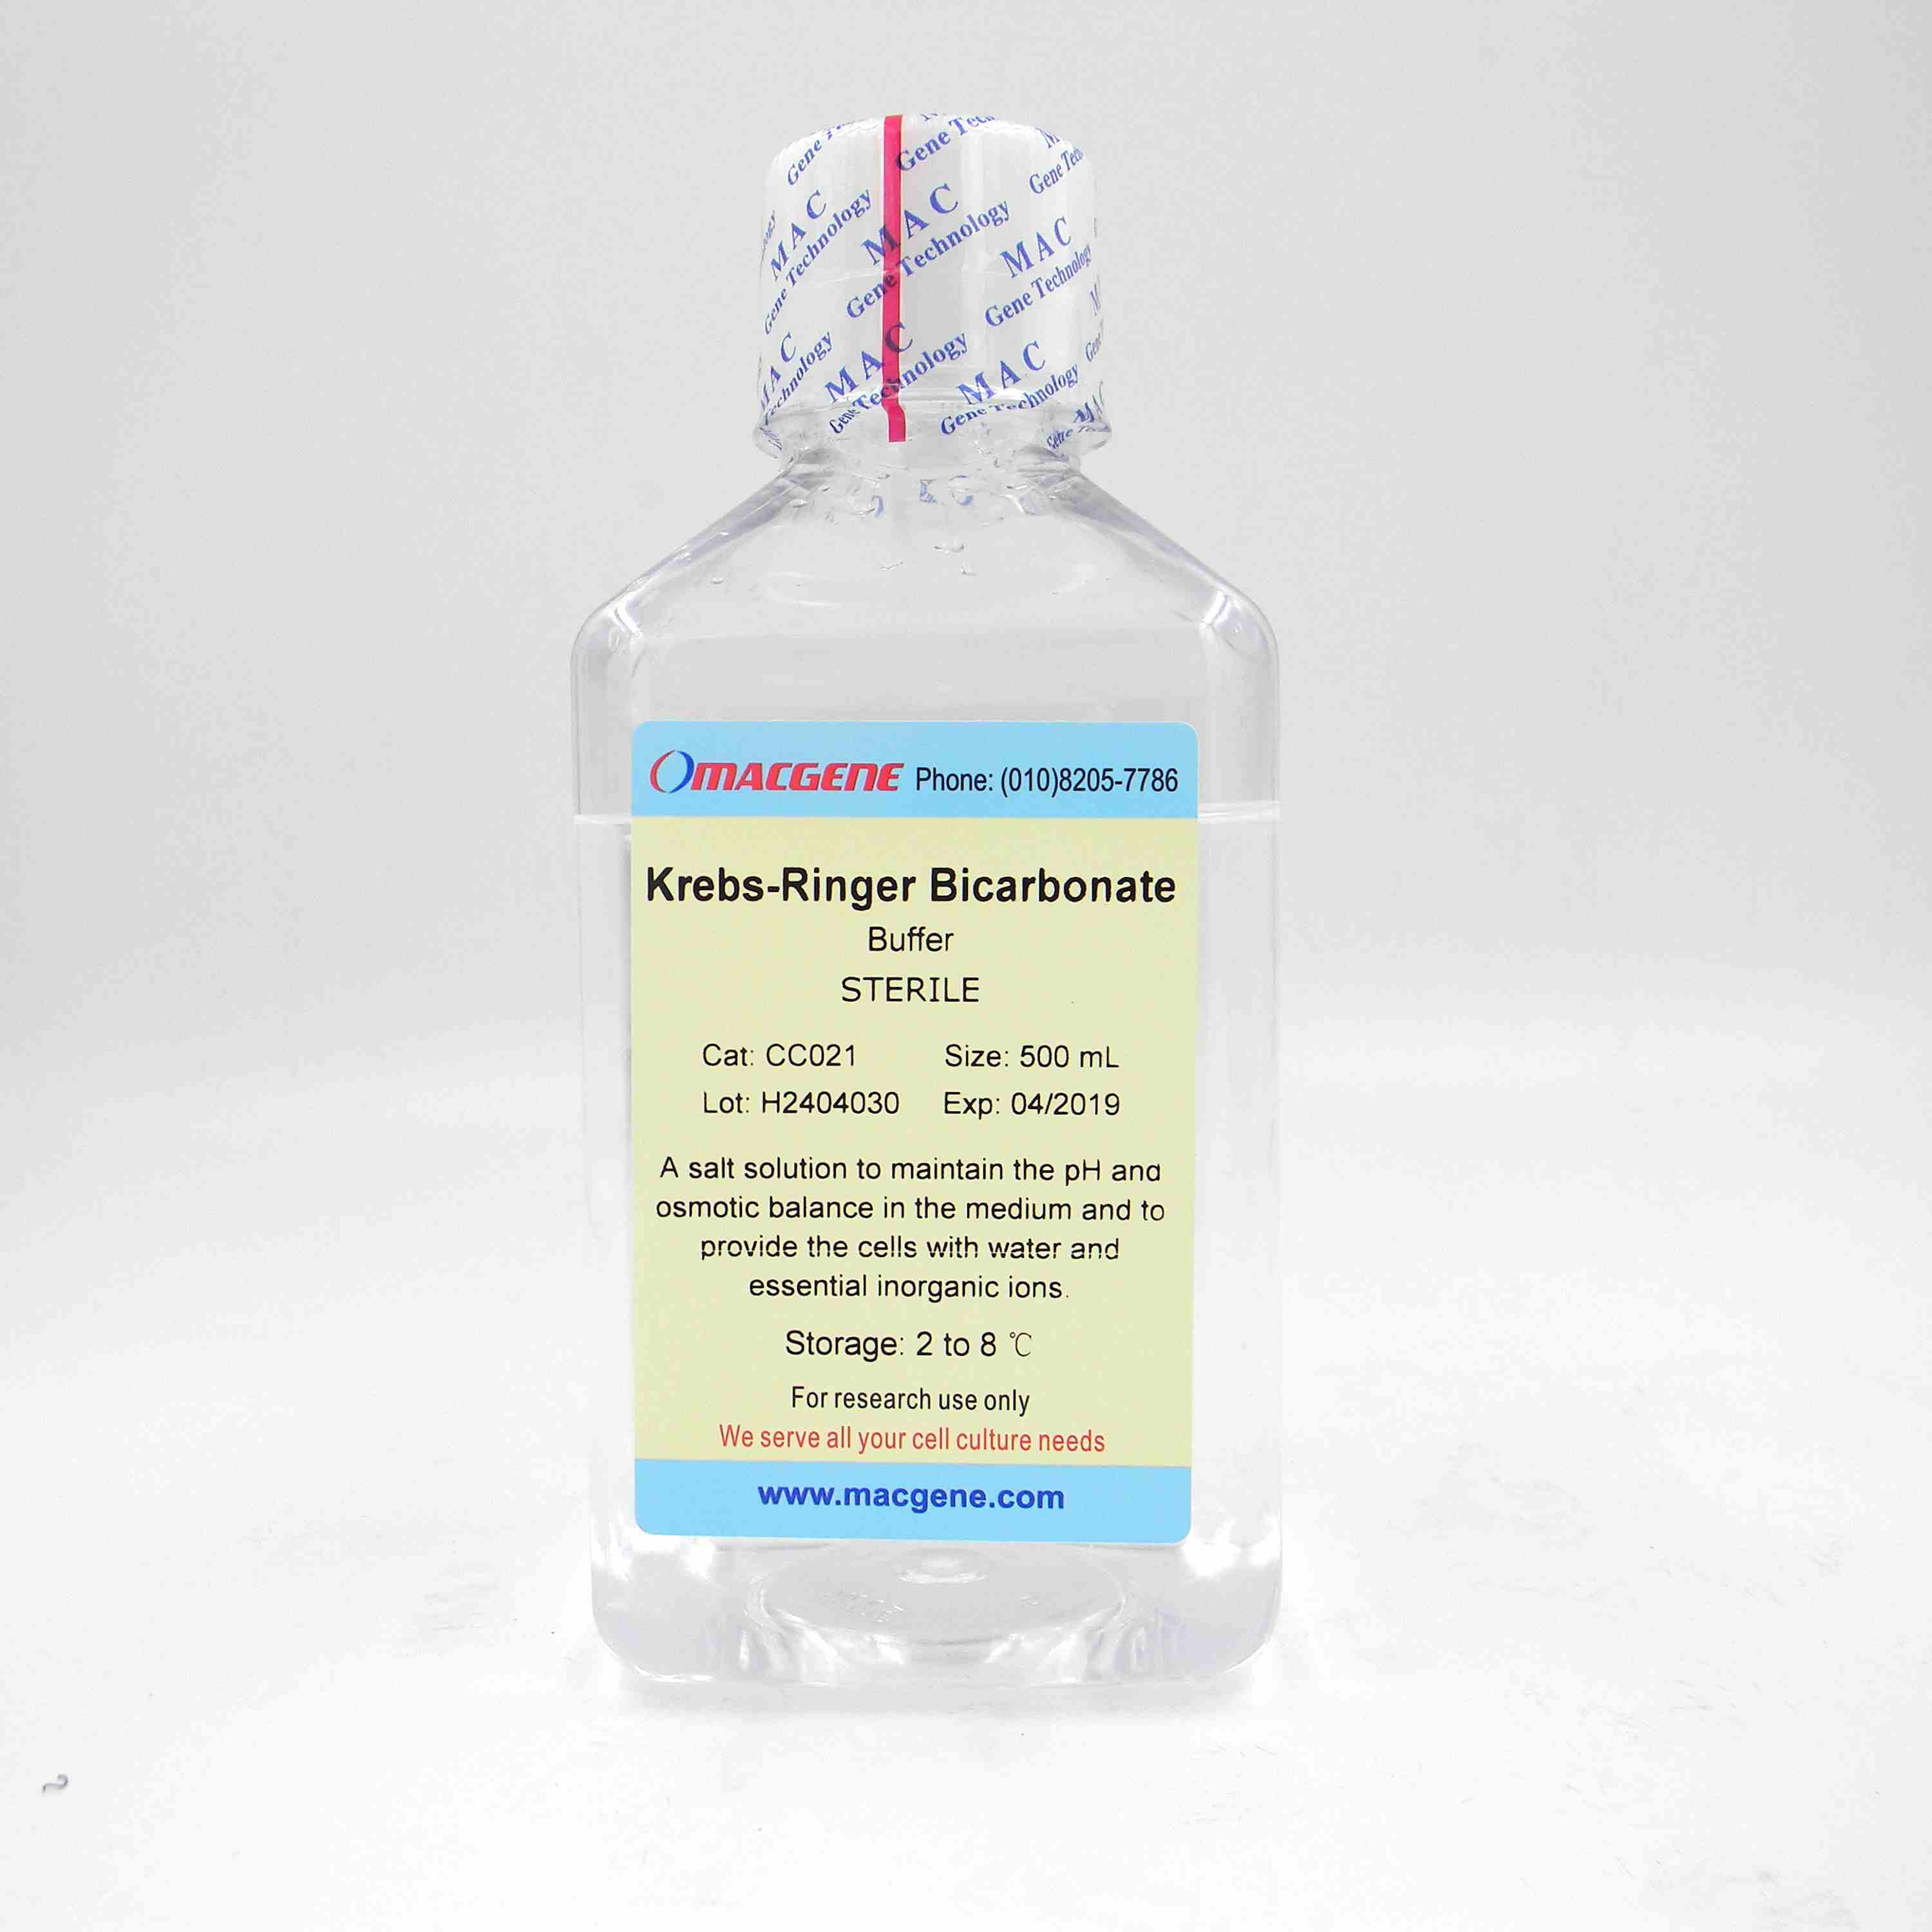 Krebs-Ringer Bicarbonate Buffer